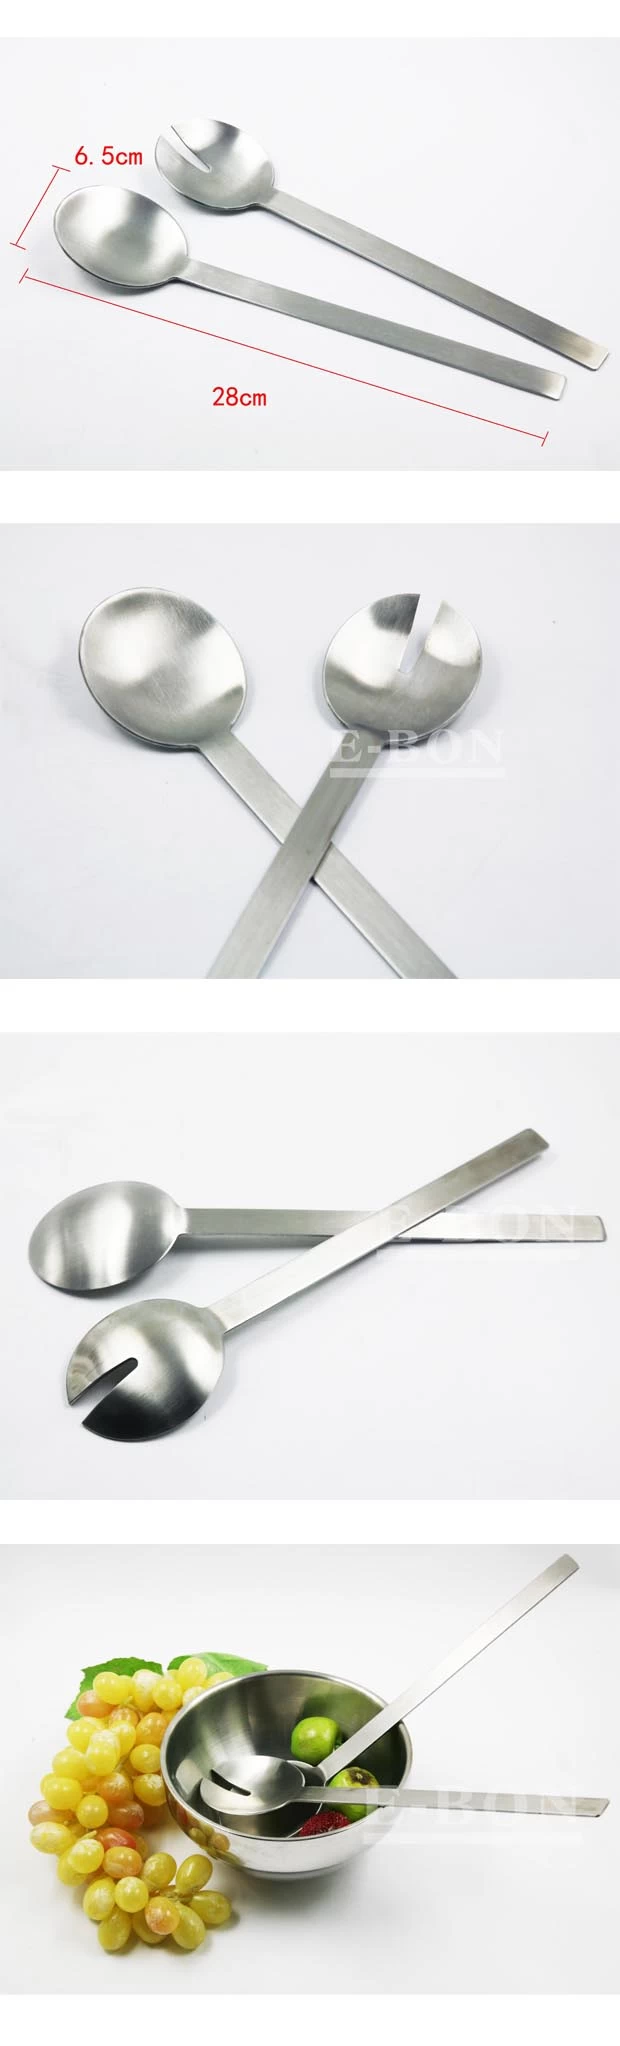 Stainless steel salad spoon